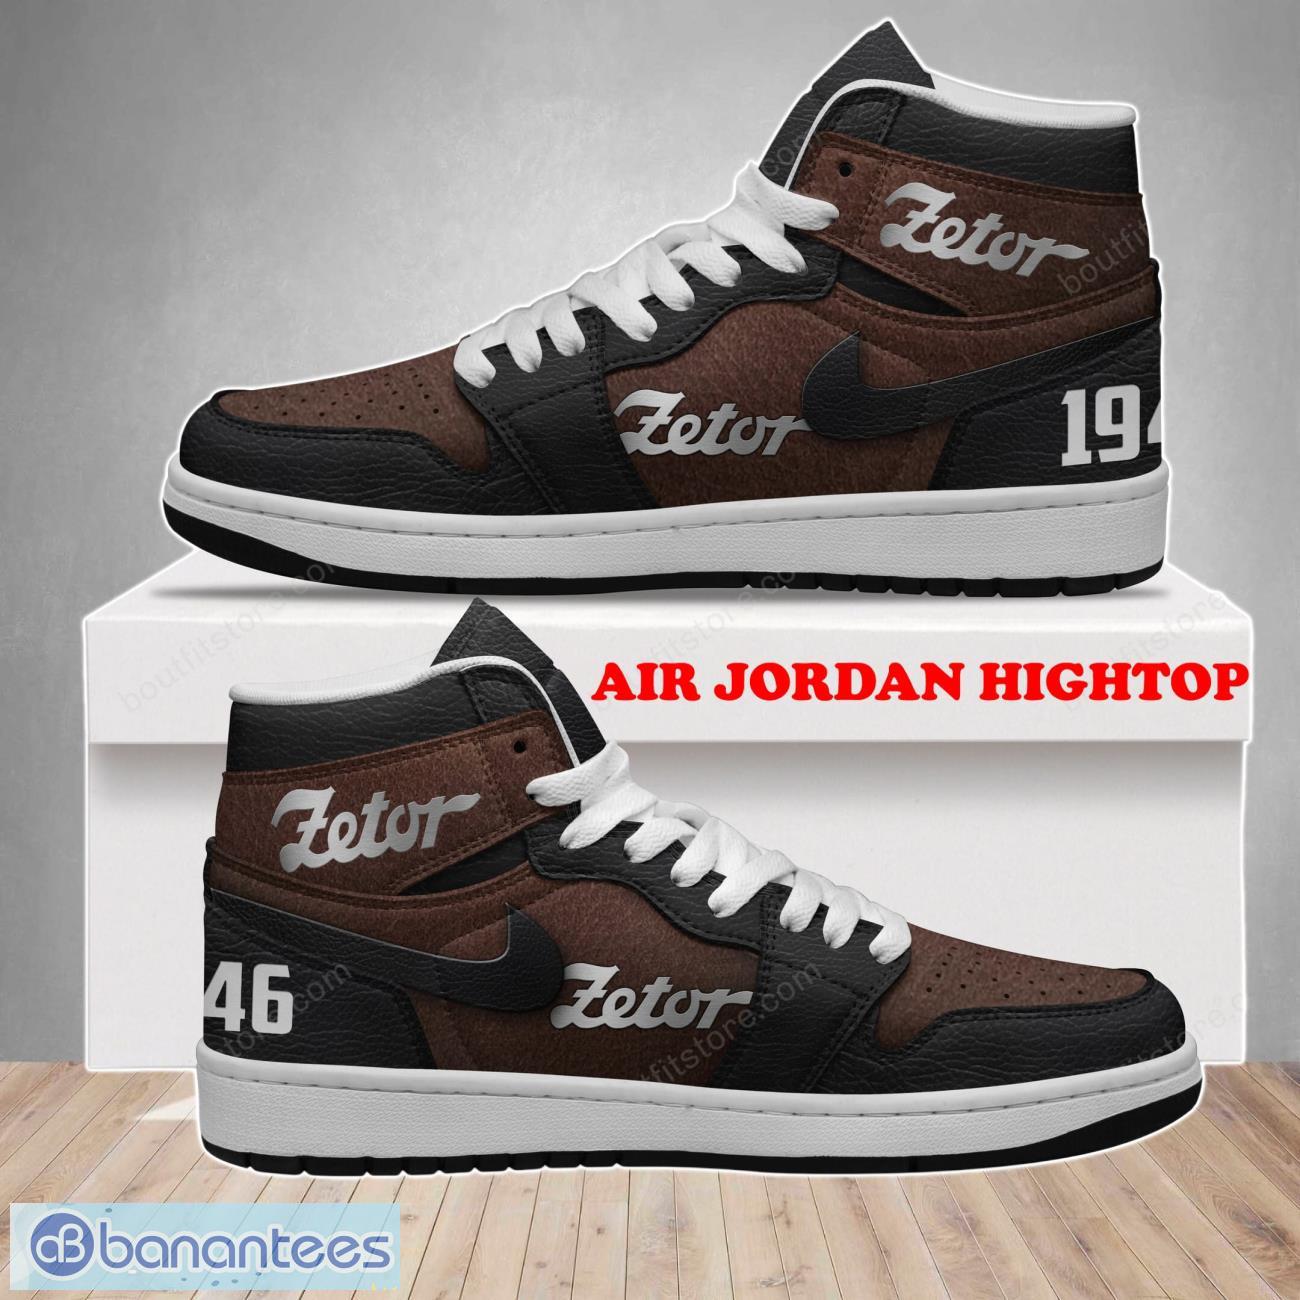 Zetor Air Jordan Hightop Classic Style For Men Women Product Photo 1